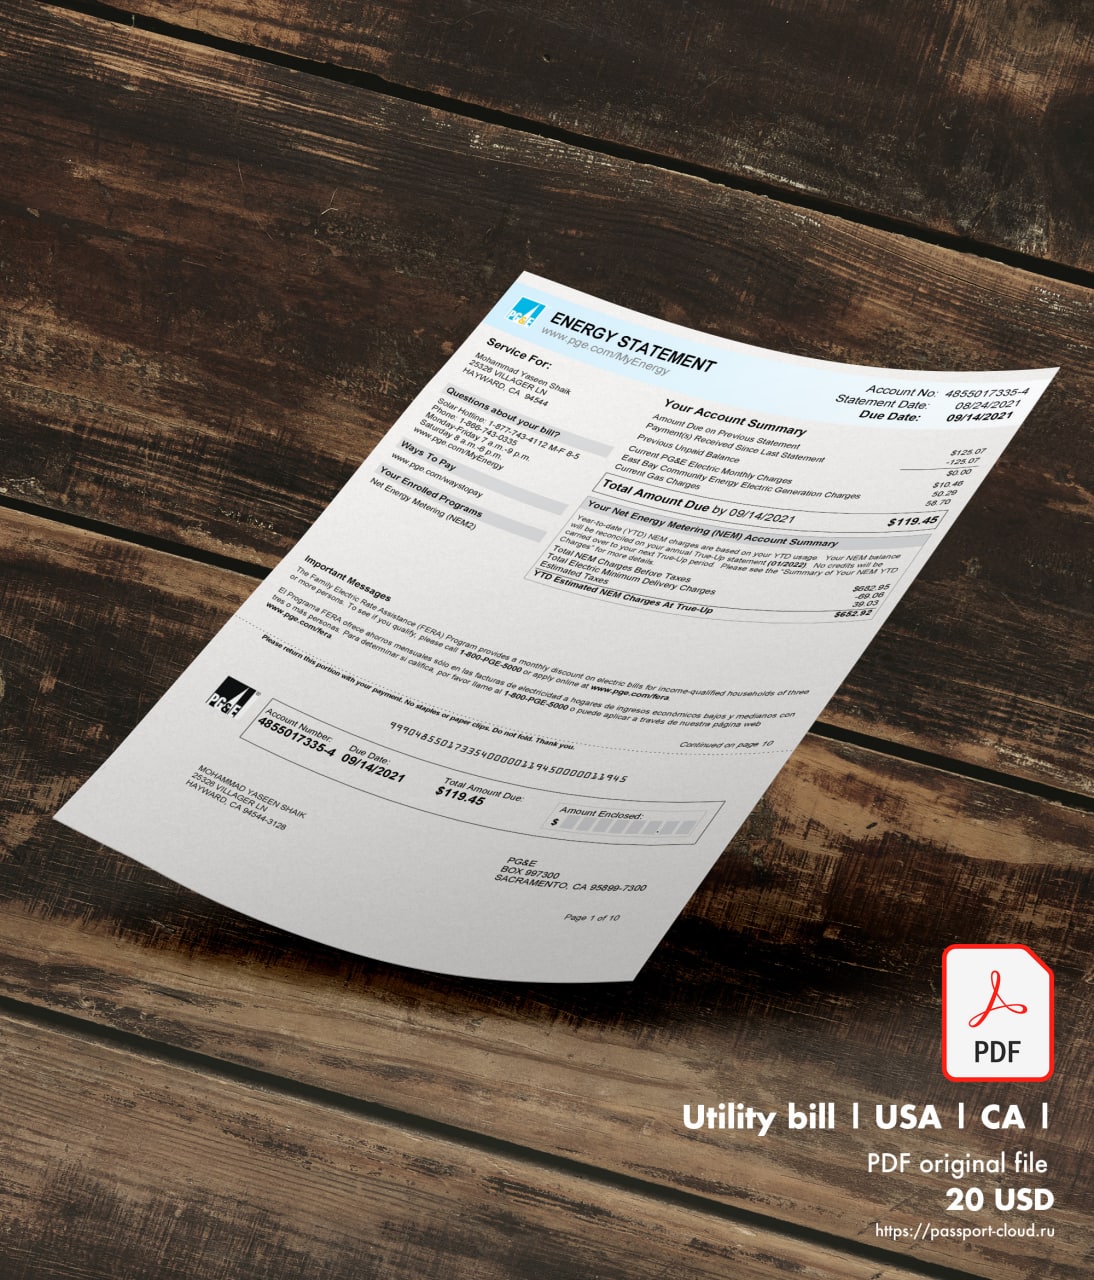 Utility bill | PGE | USA | CA-0